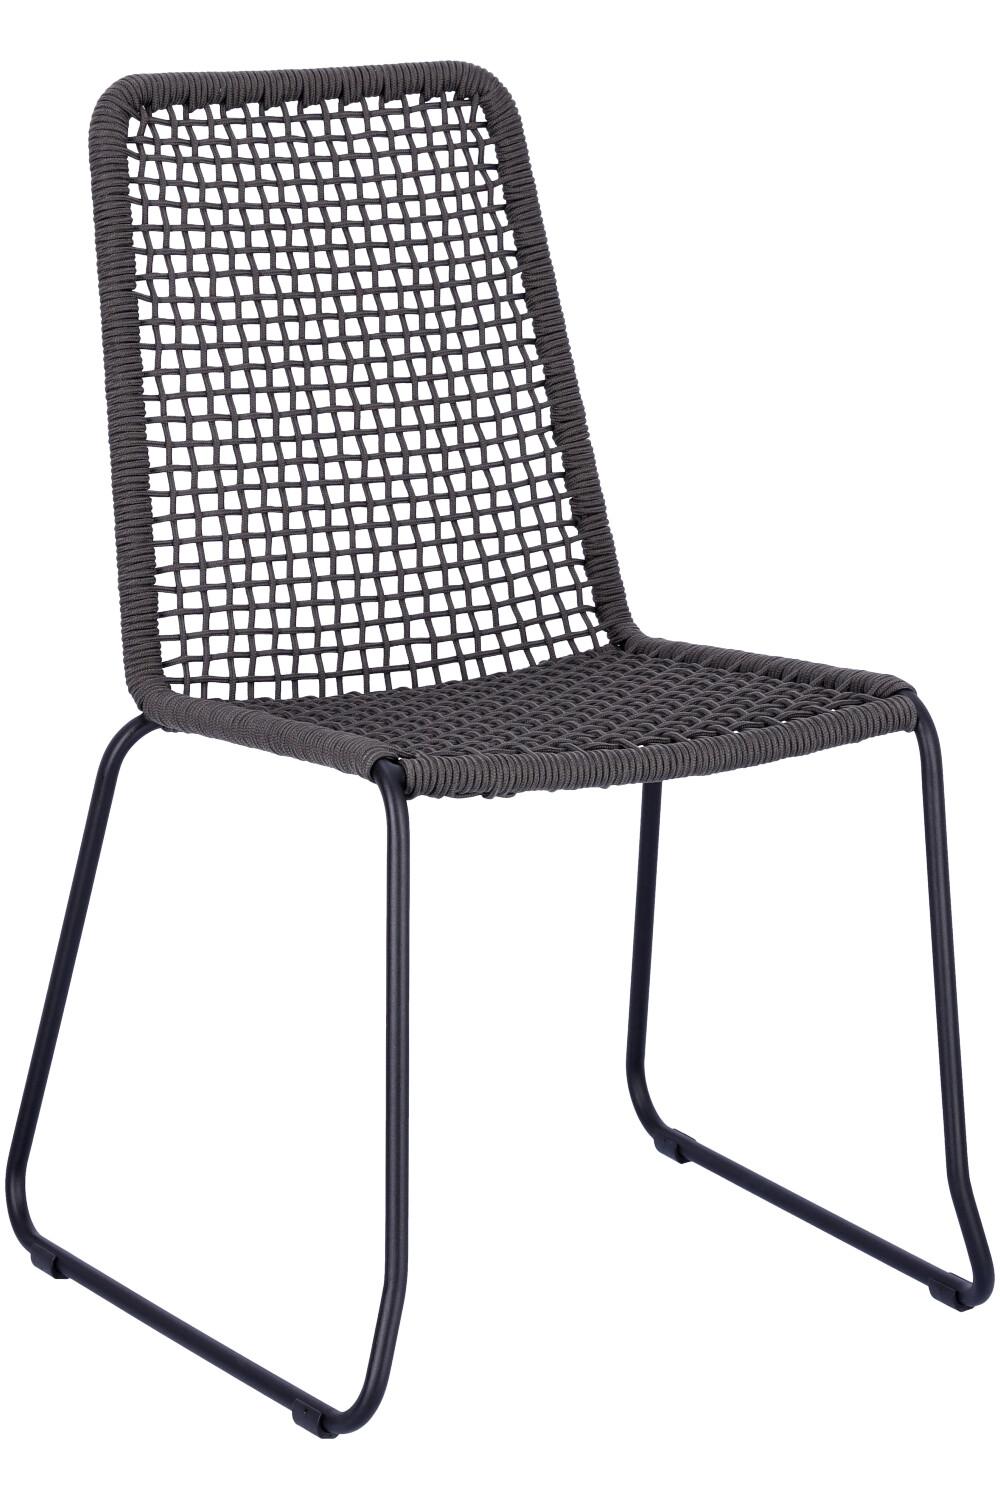 chaise Tacu